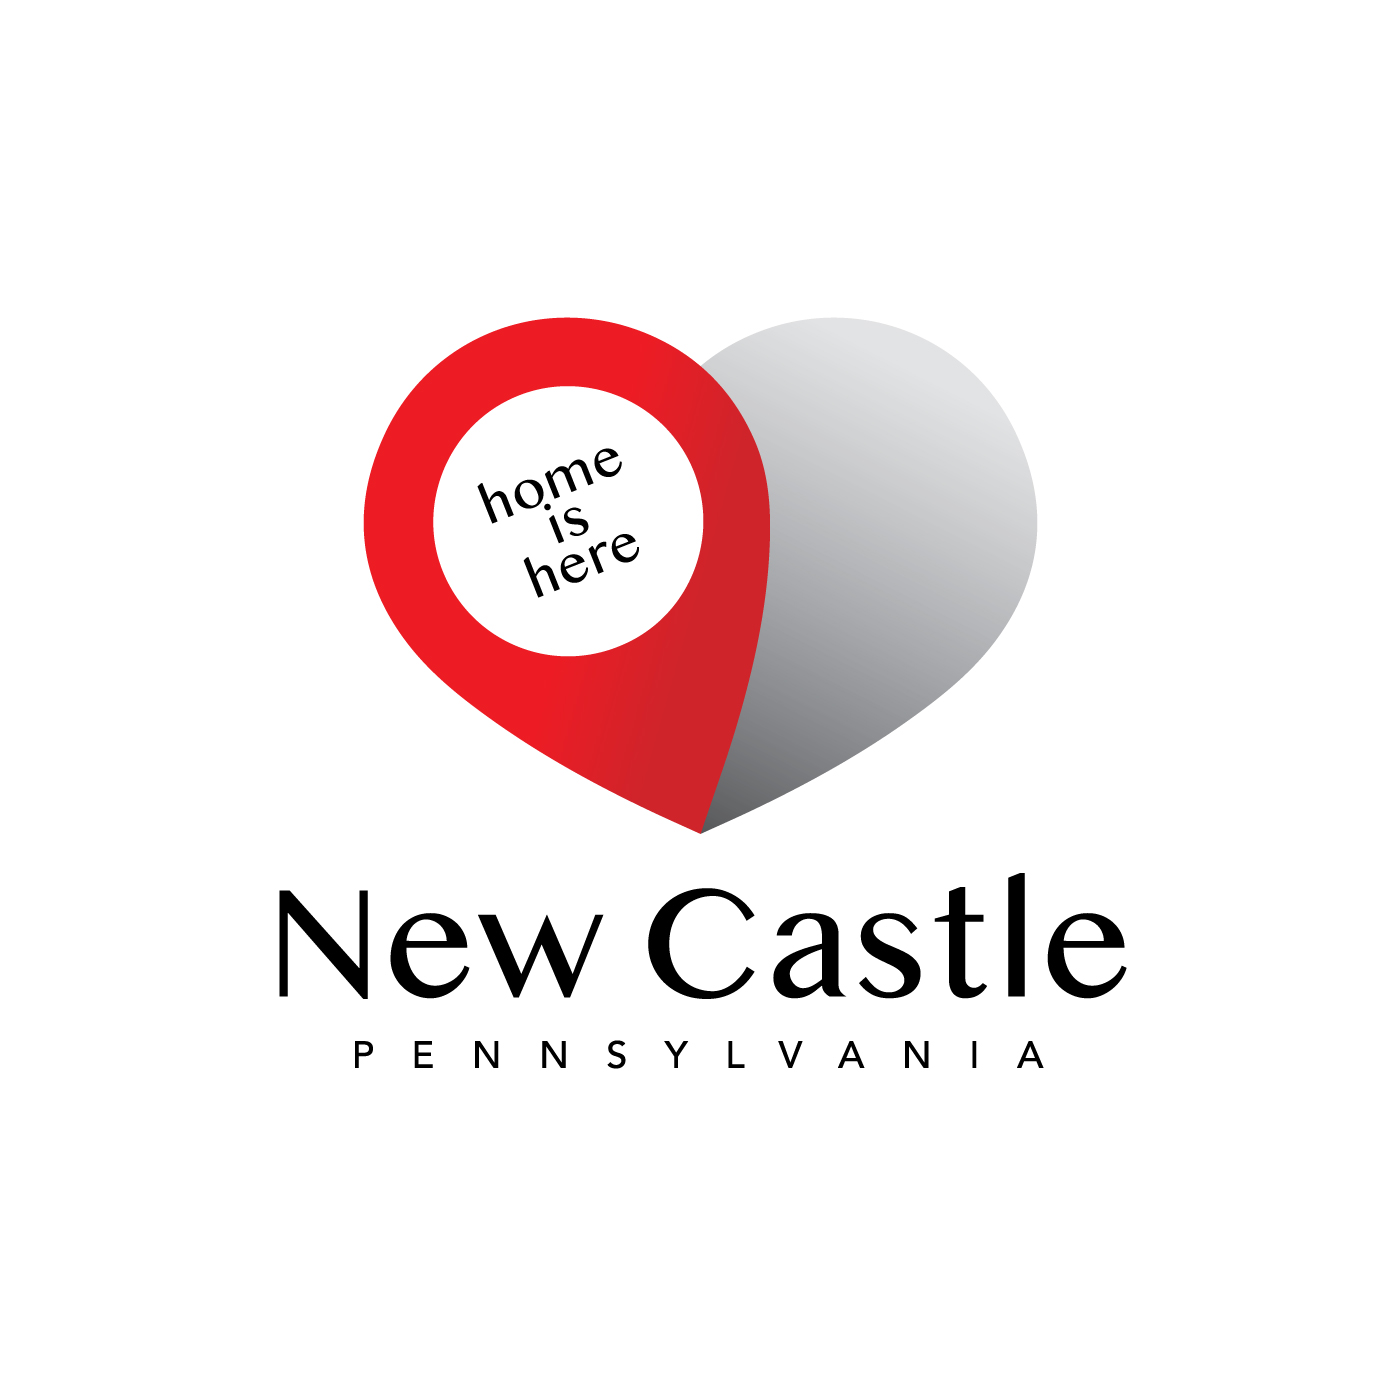 The City of New Castle, Pennsylvania